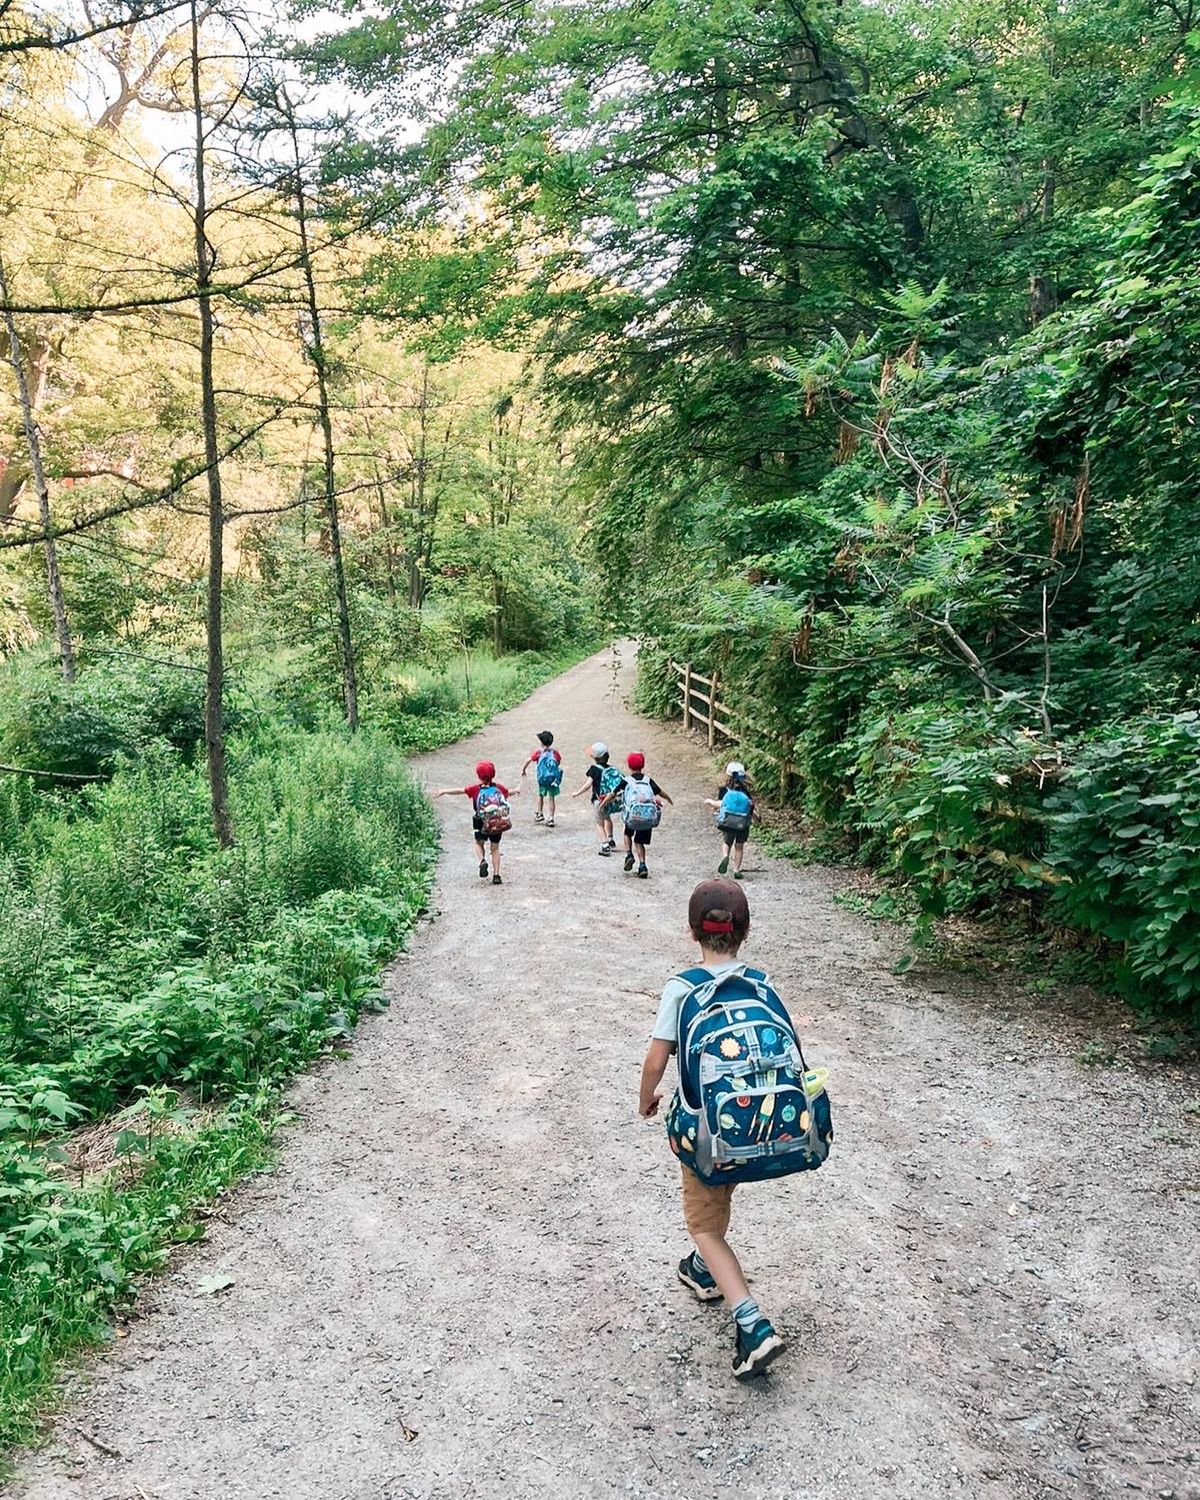 The Toronto Nature School is nurturing the next generation of outdoor advocates